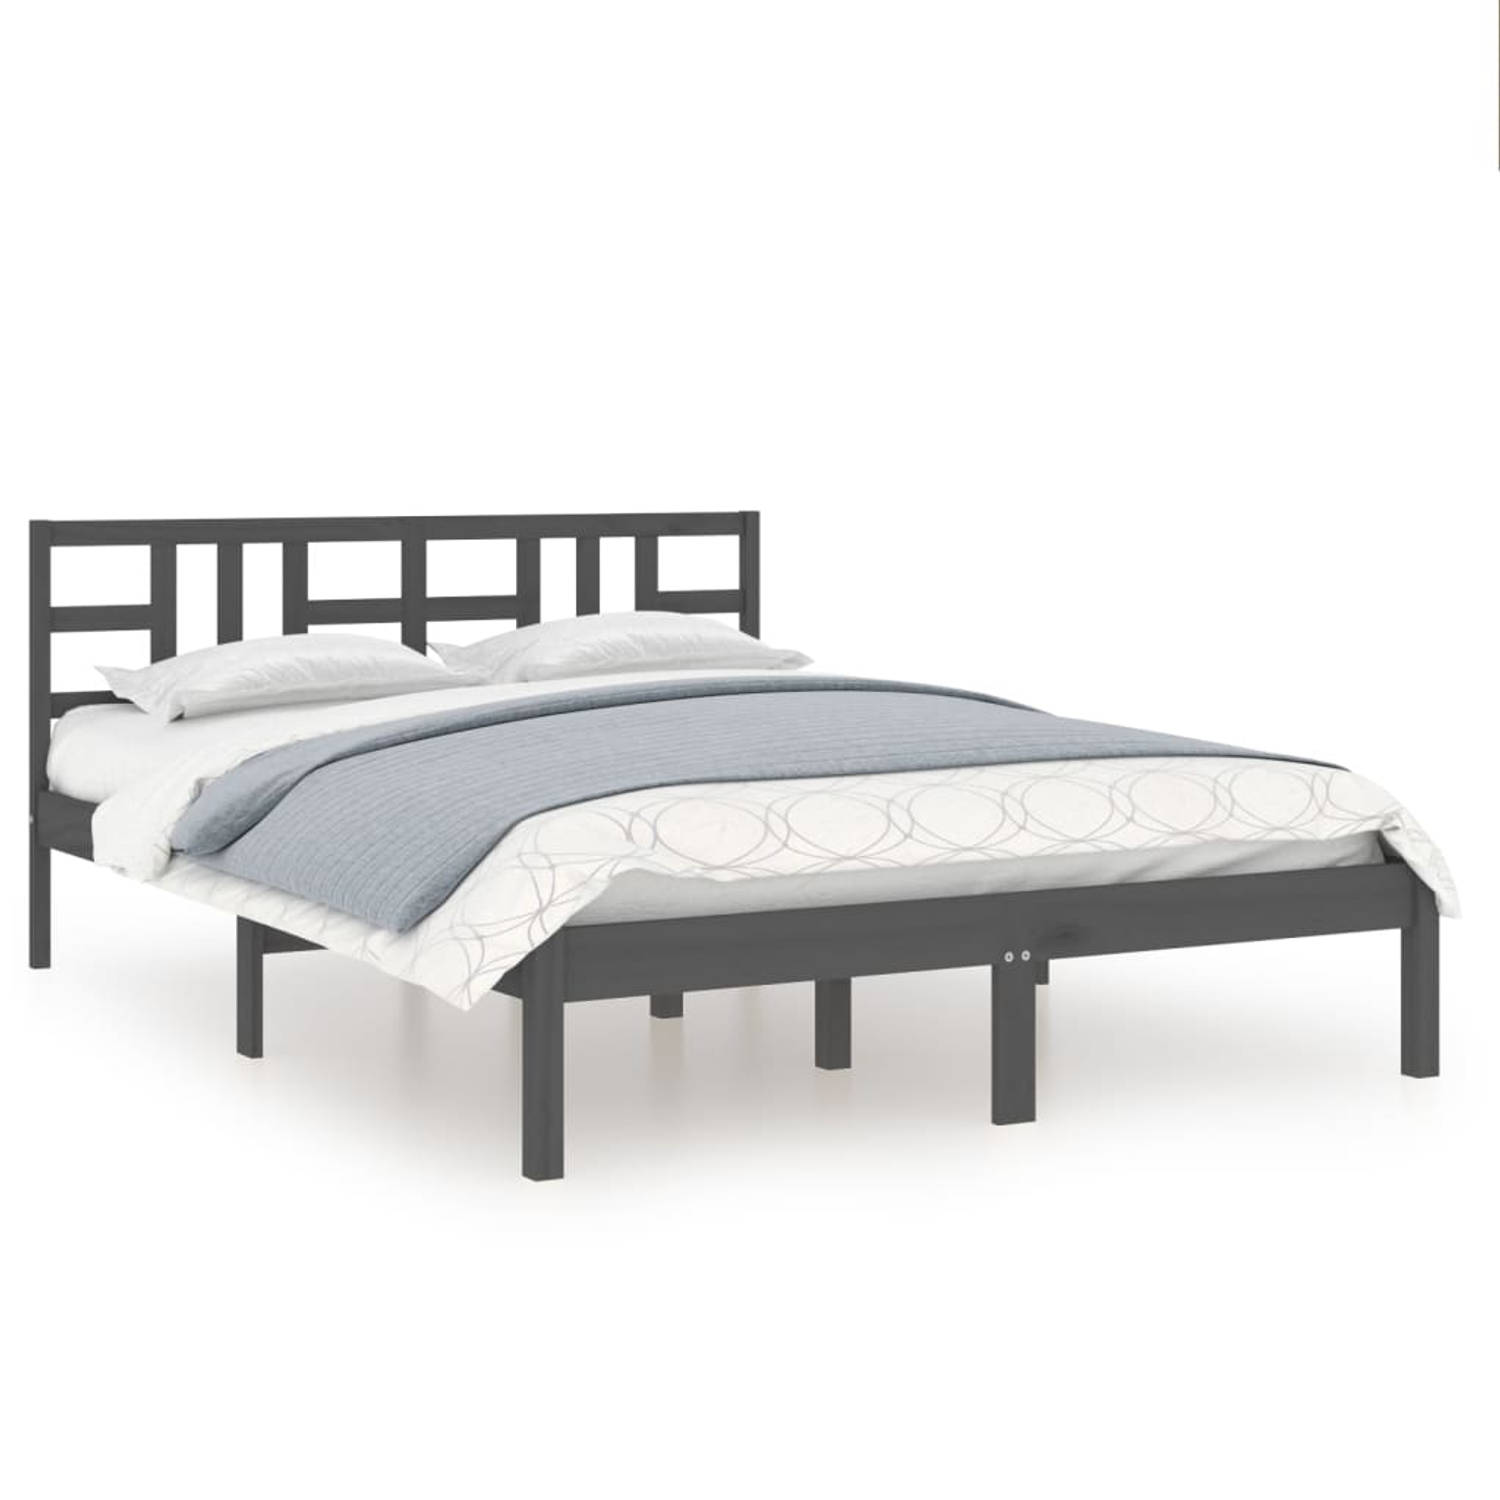 The Living Store Bedframe massief hout grijs 135x190 cm 4FT6 Double - Bedframe - Bedframes - Tweepersoonsbed - Bed - Bedombouw - Dubbel Bed - Frame - Bed Frame - Ledikant - Houten